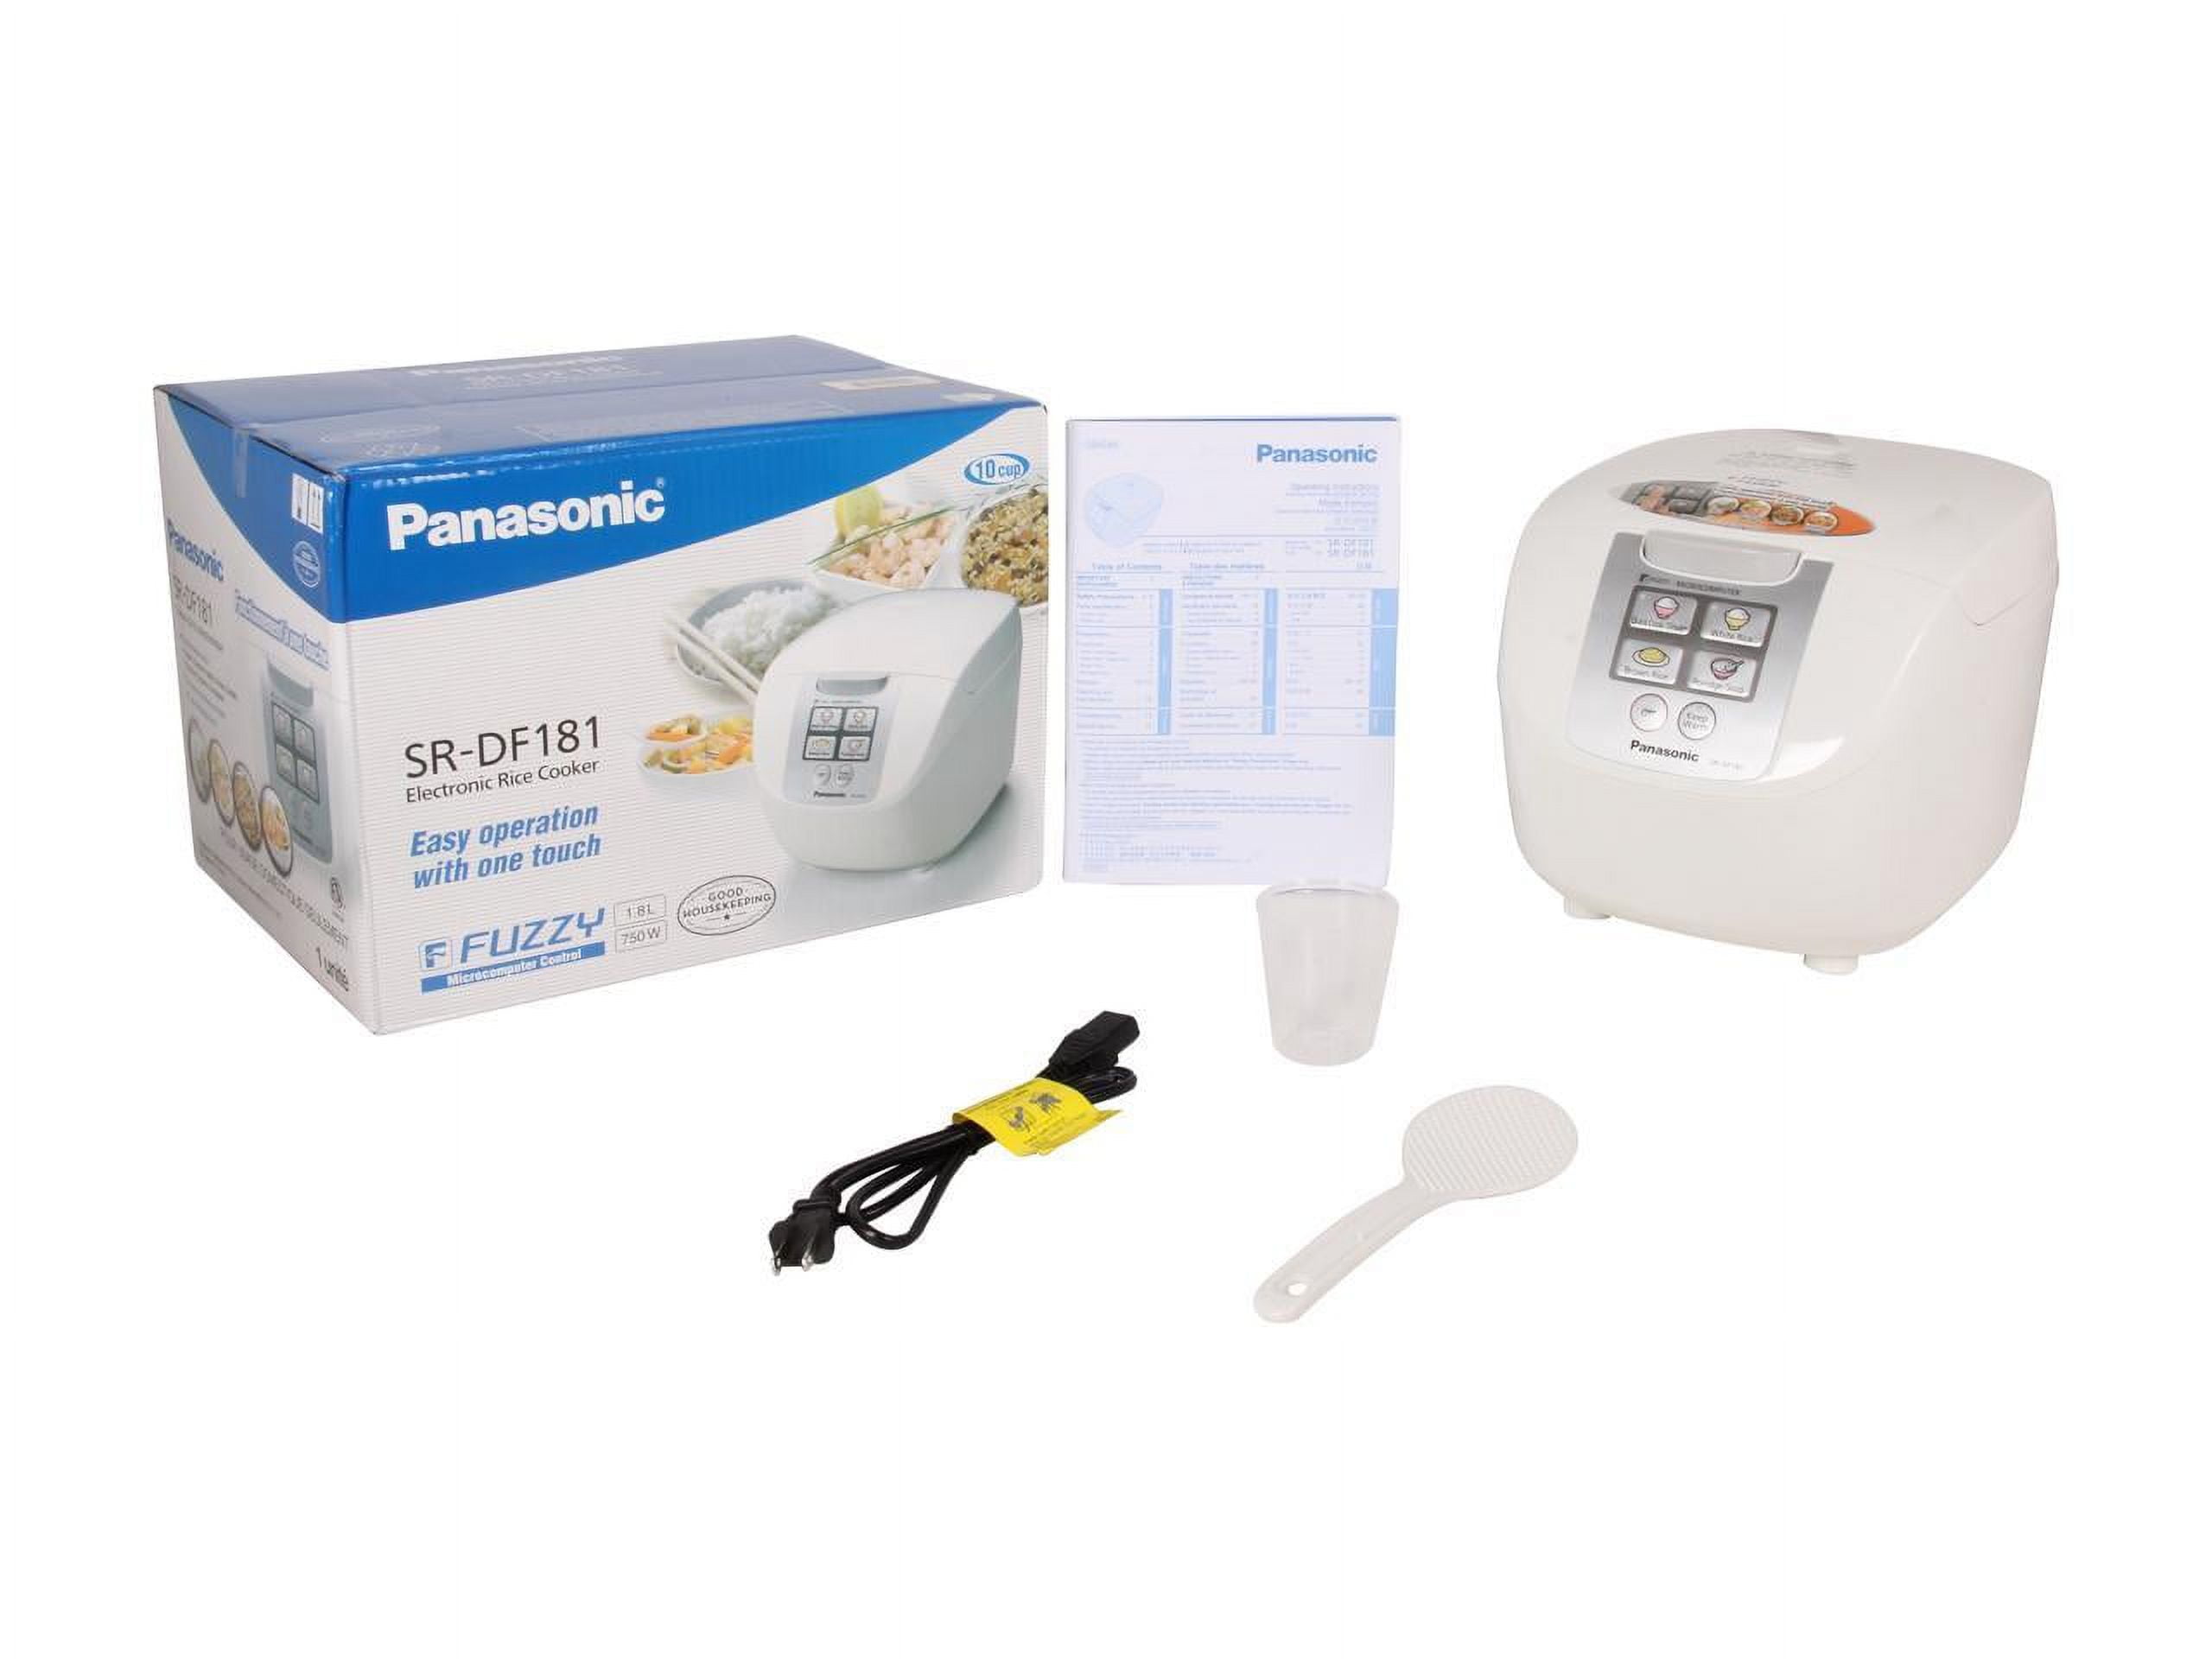 Panasonic SR-MS102 5 Cup Microcom Fuzzy Logic® Rice Cooker